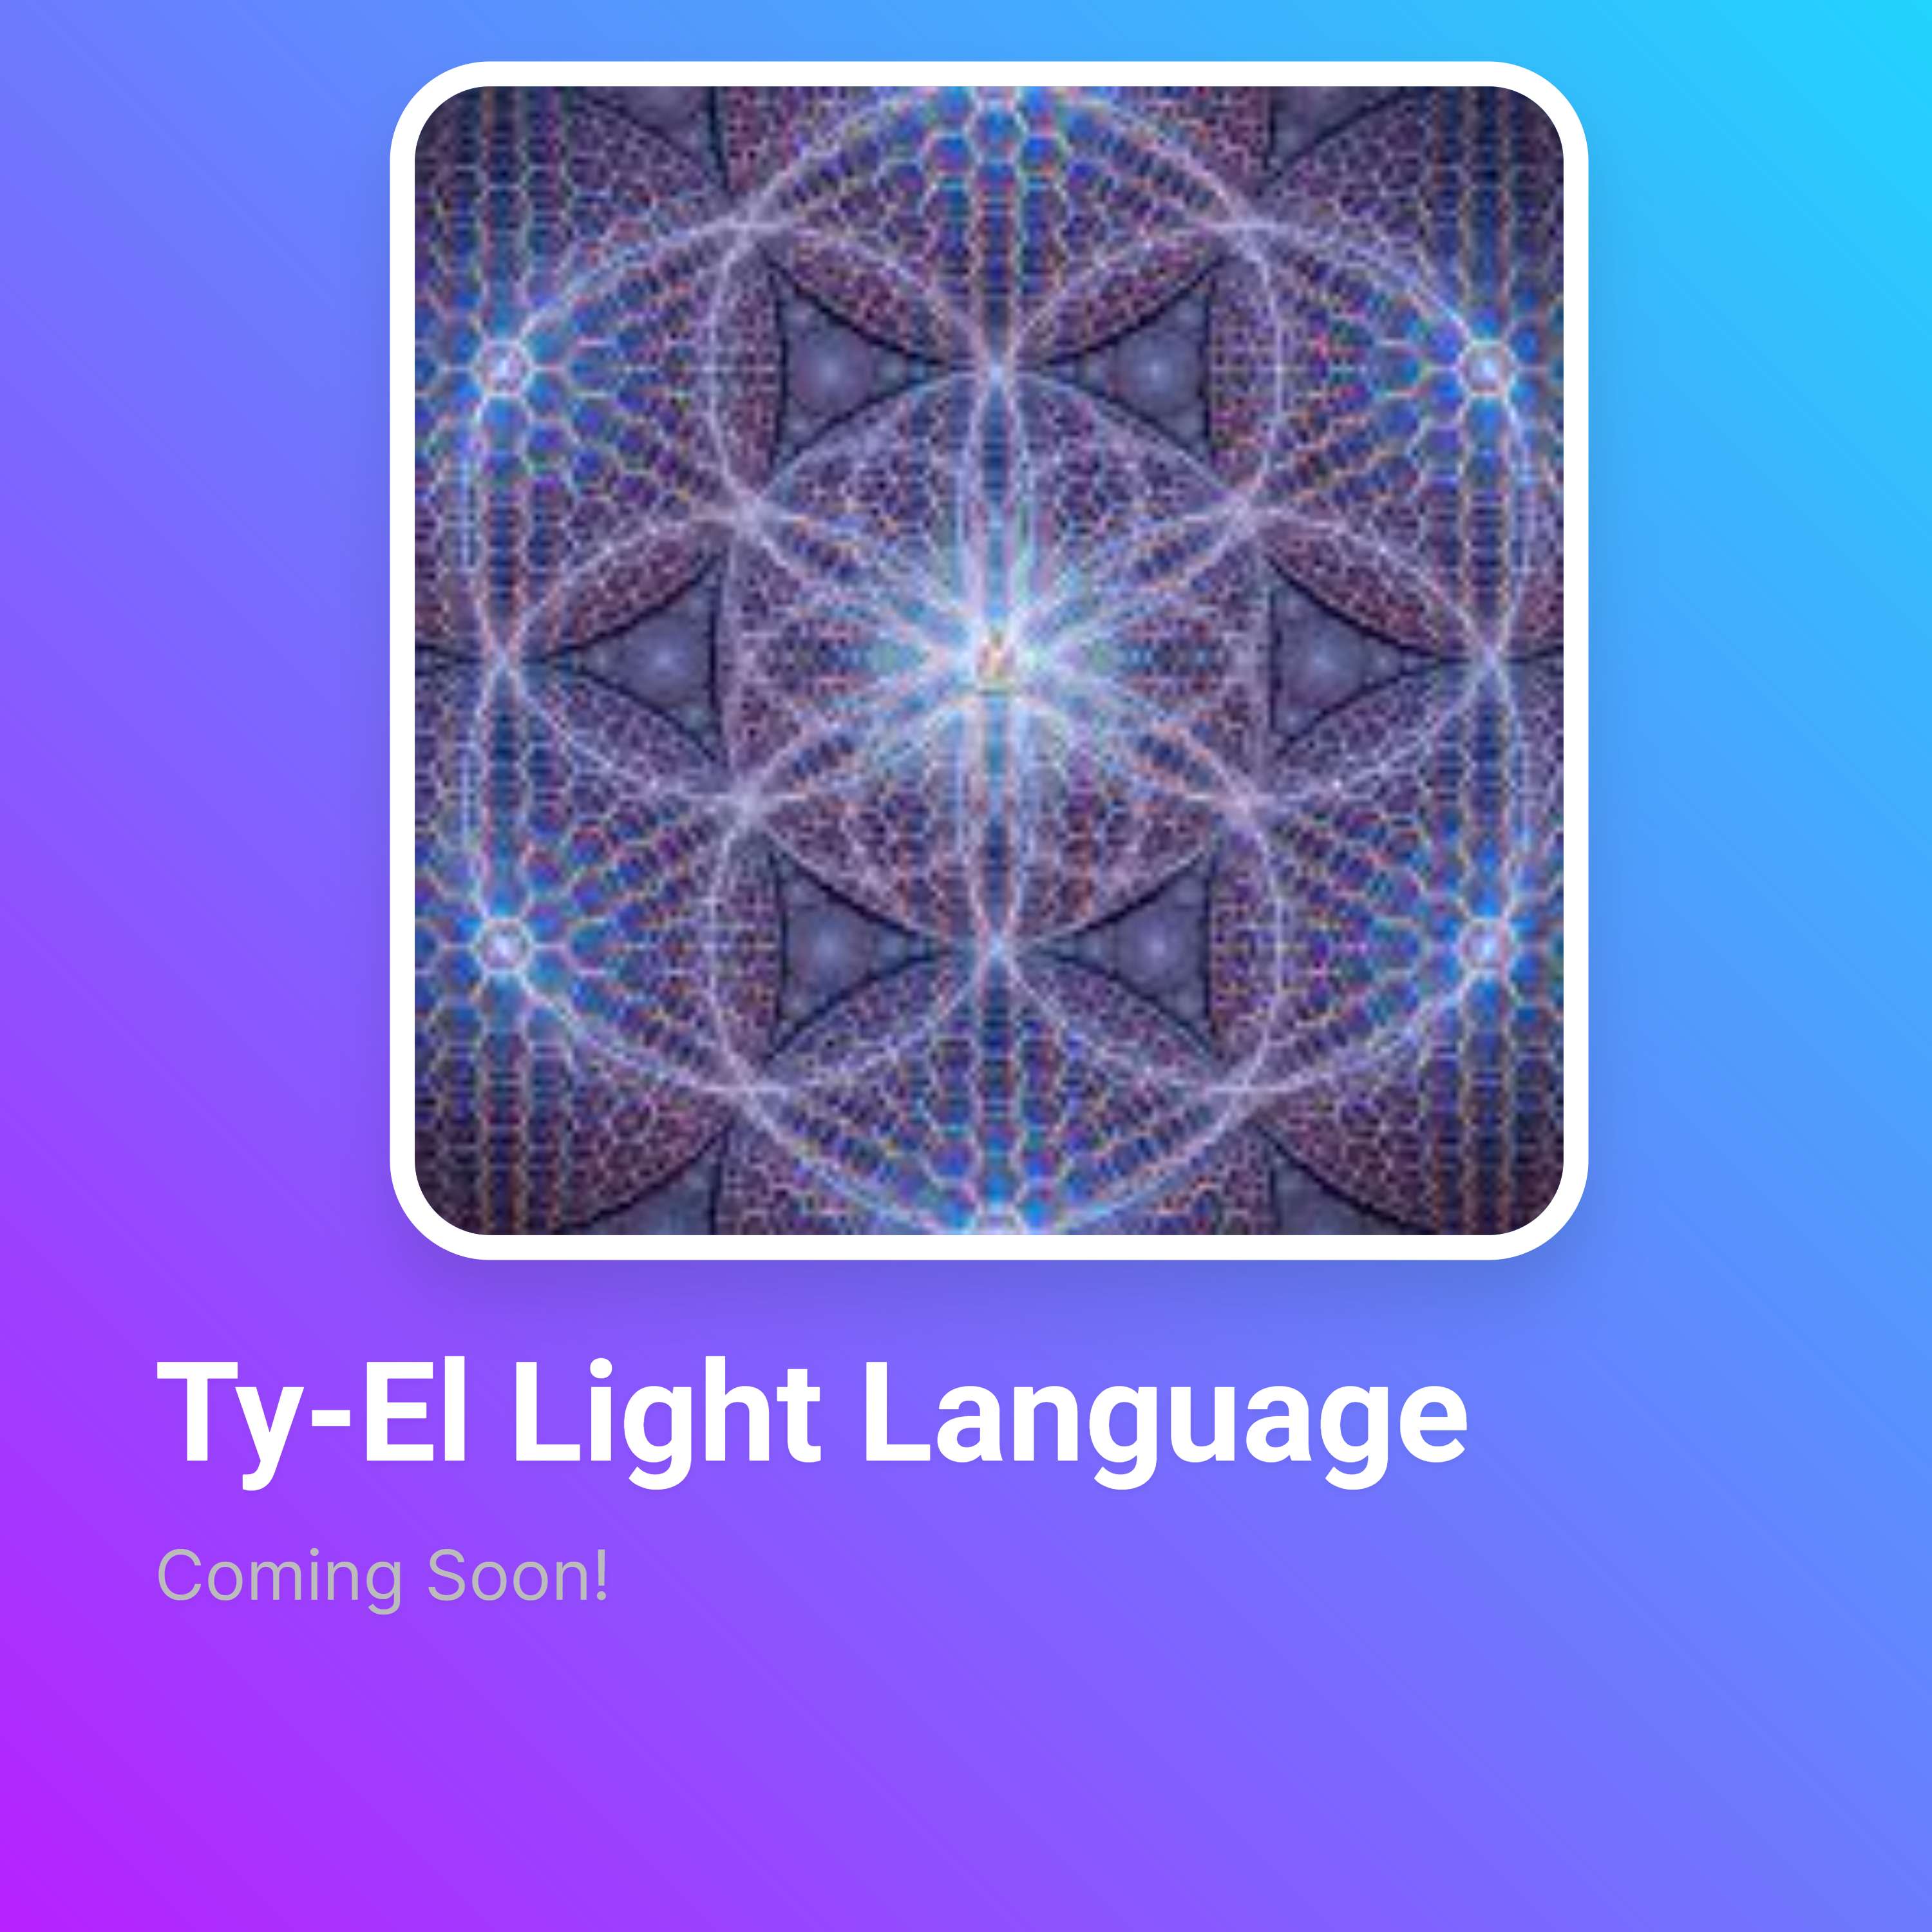 Ty-El Light Language